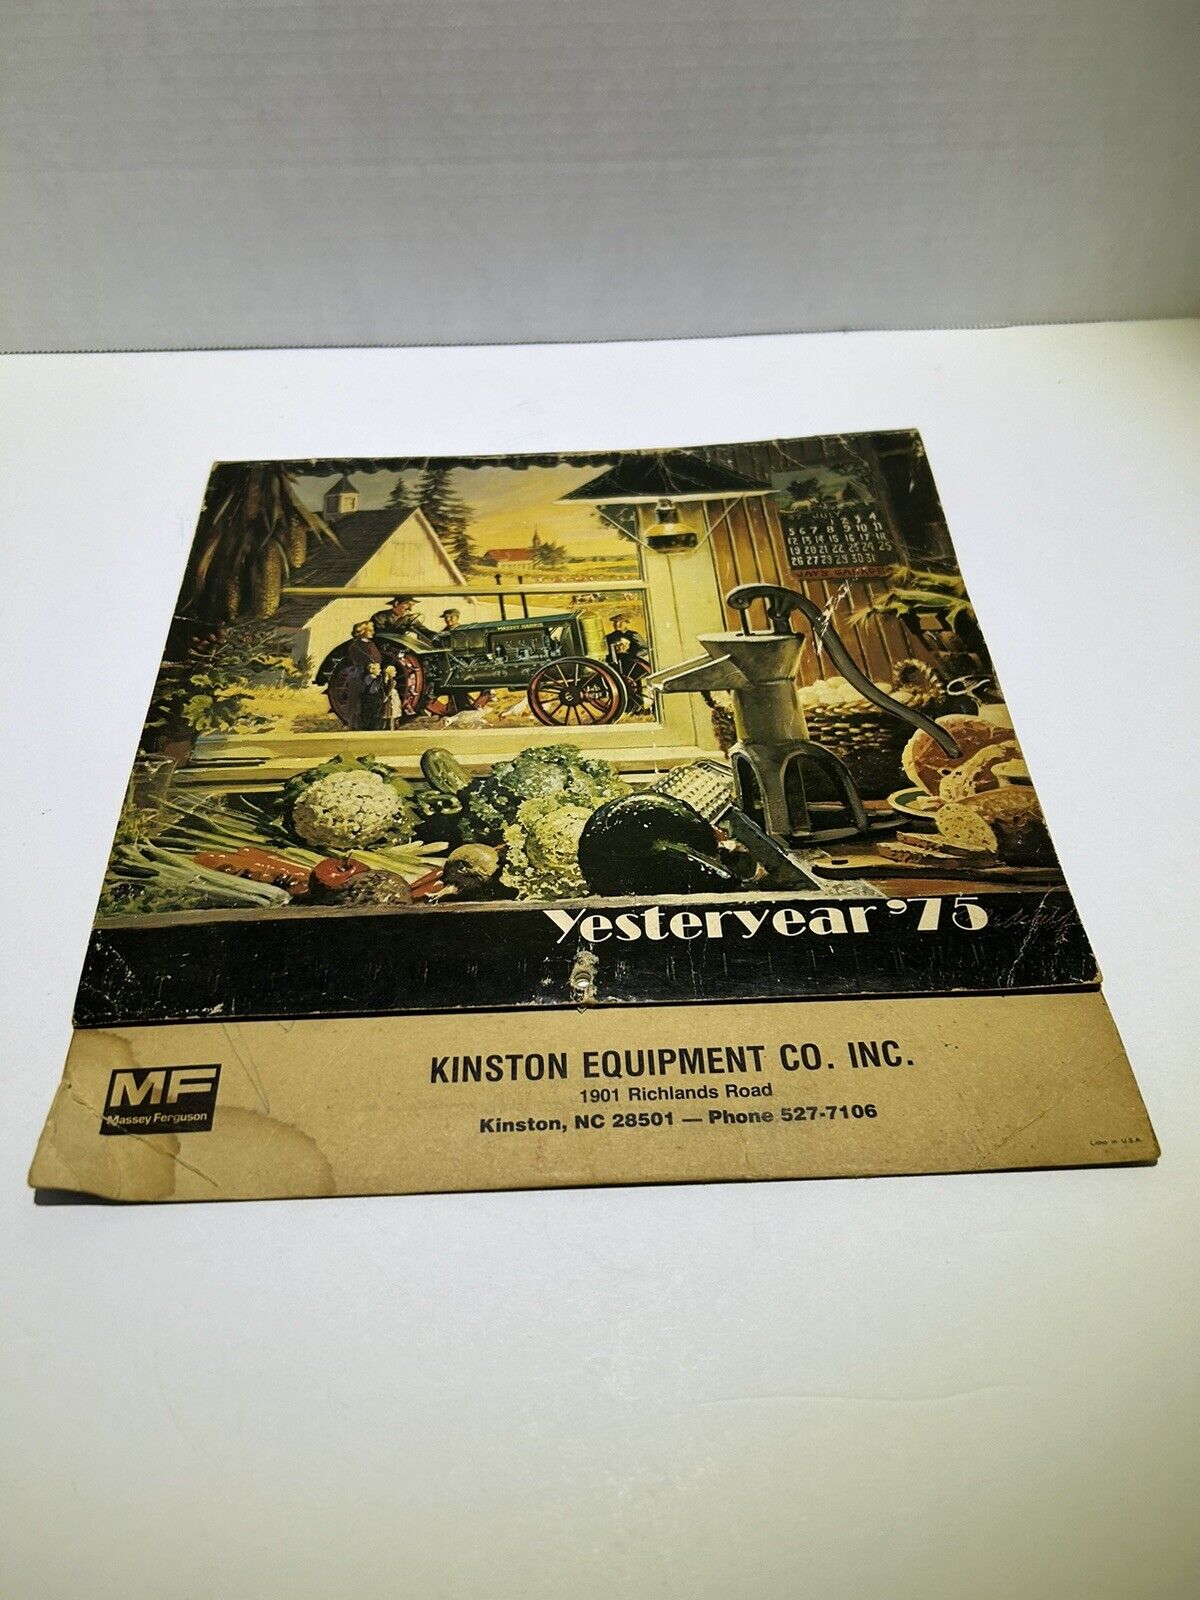 1975 Massey Ferguson Calendar Kinston Equipment Company Inc. Kinston, NC